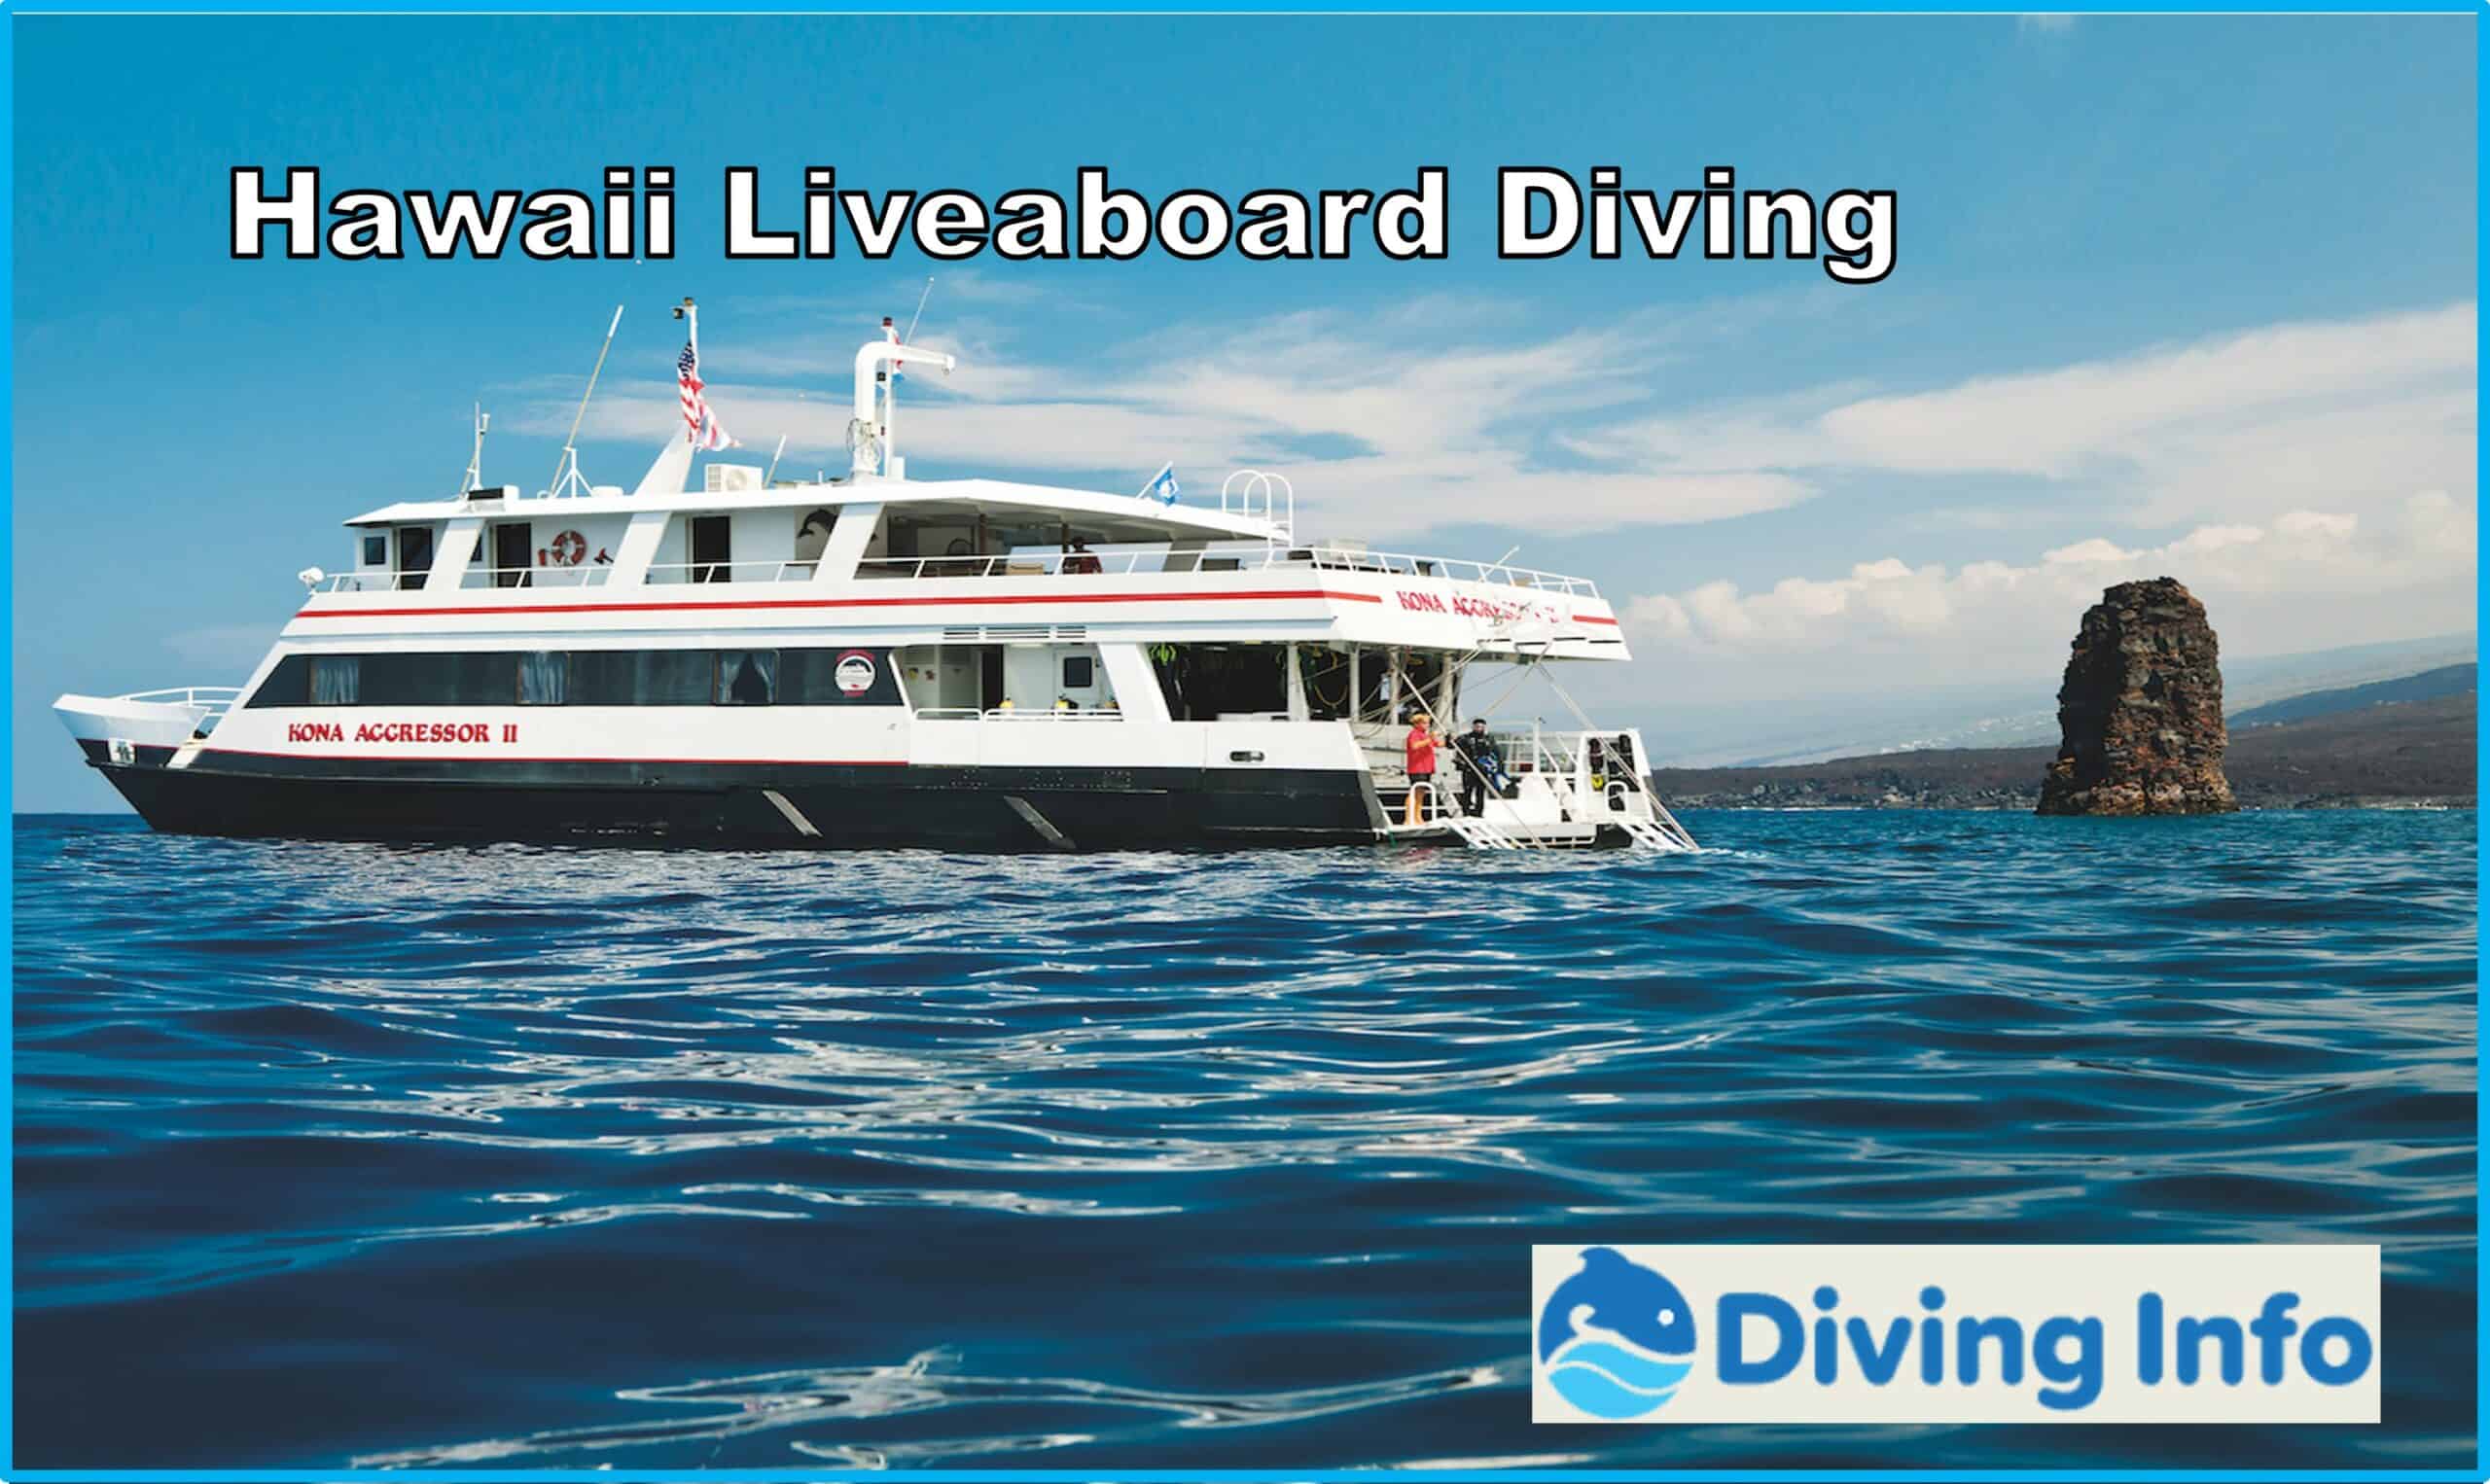 Hawaii Liveaboard Diving